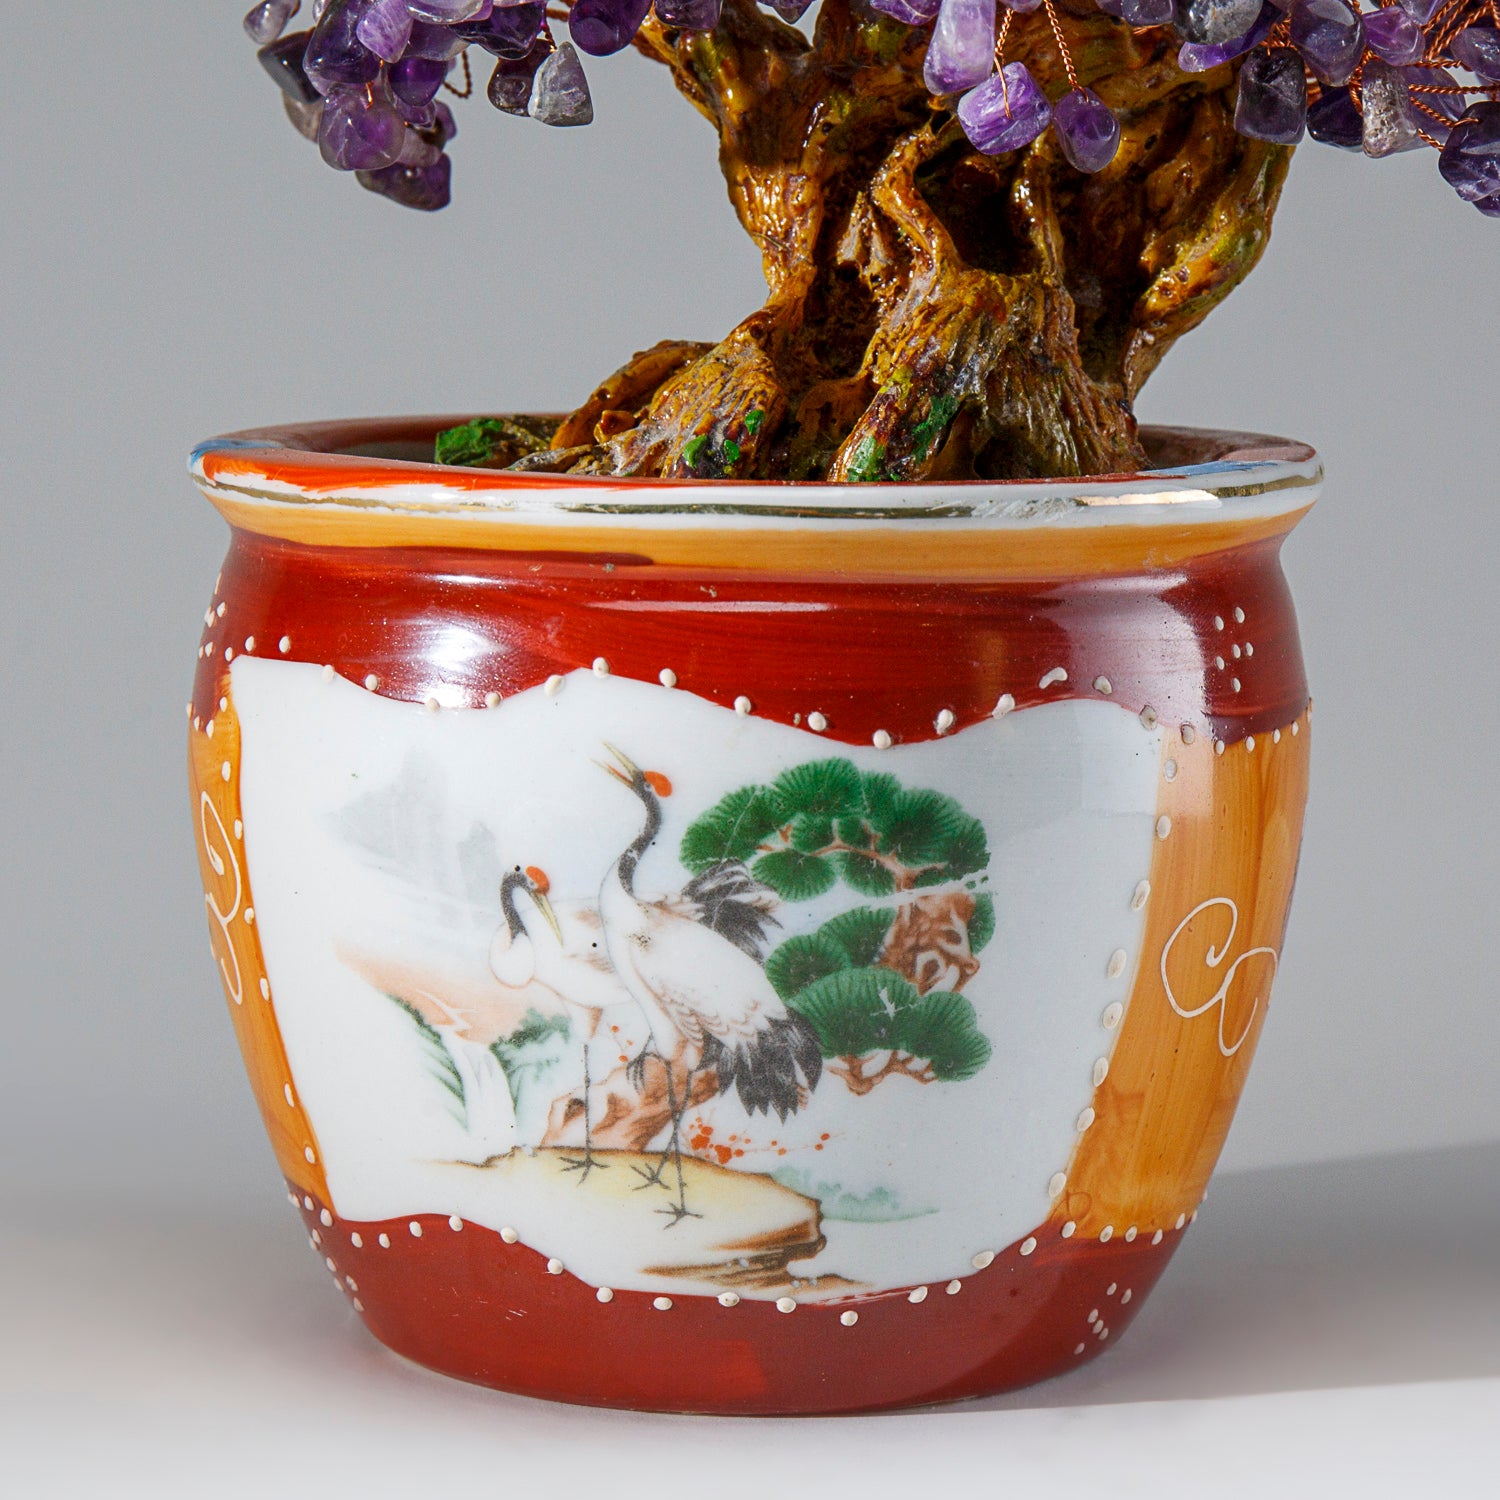 Genuine Amethyst Gemstone Bonsai Tree in Round Ceramic Pot (10” Tall)